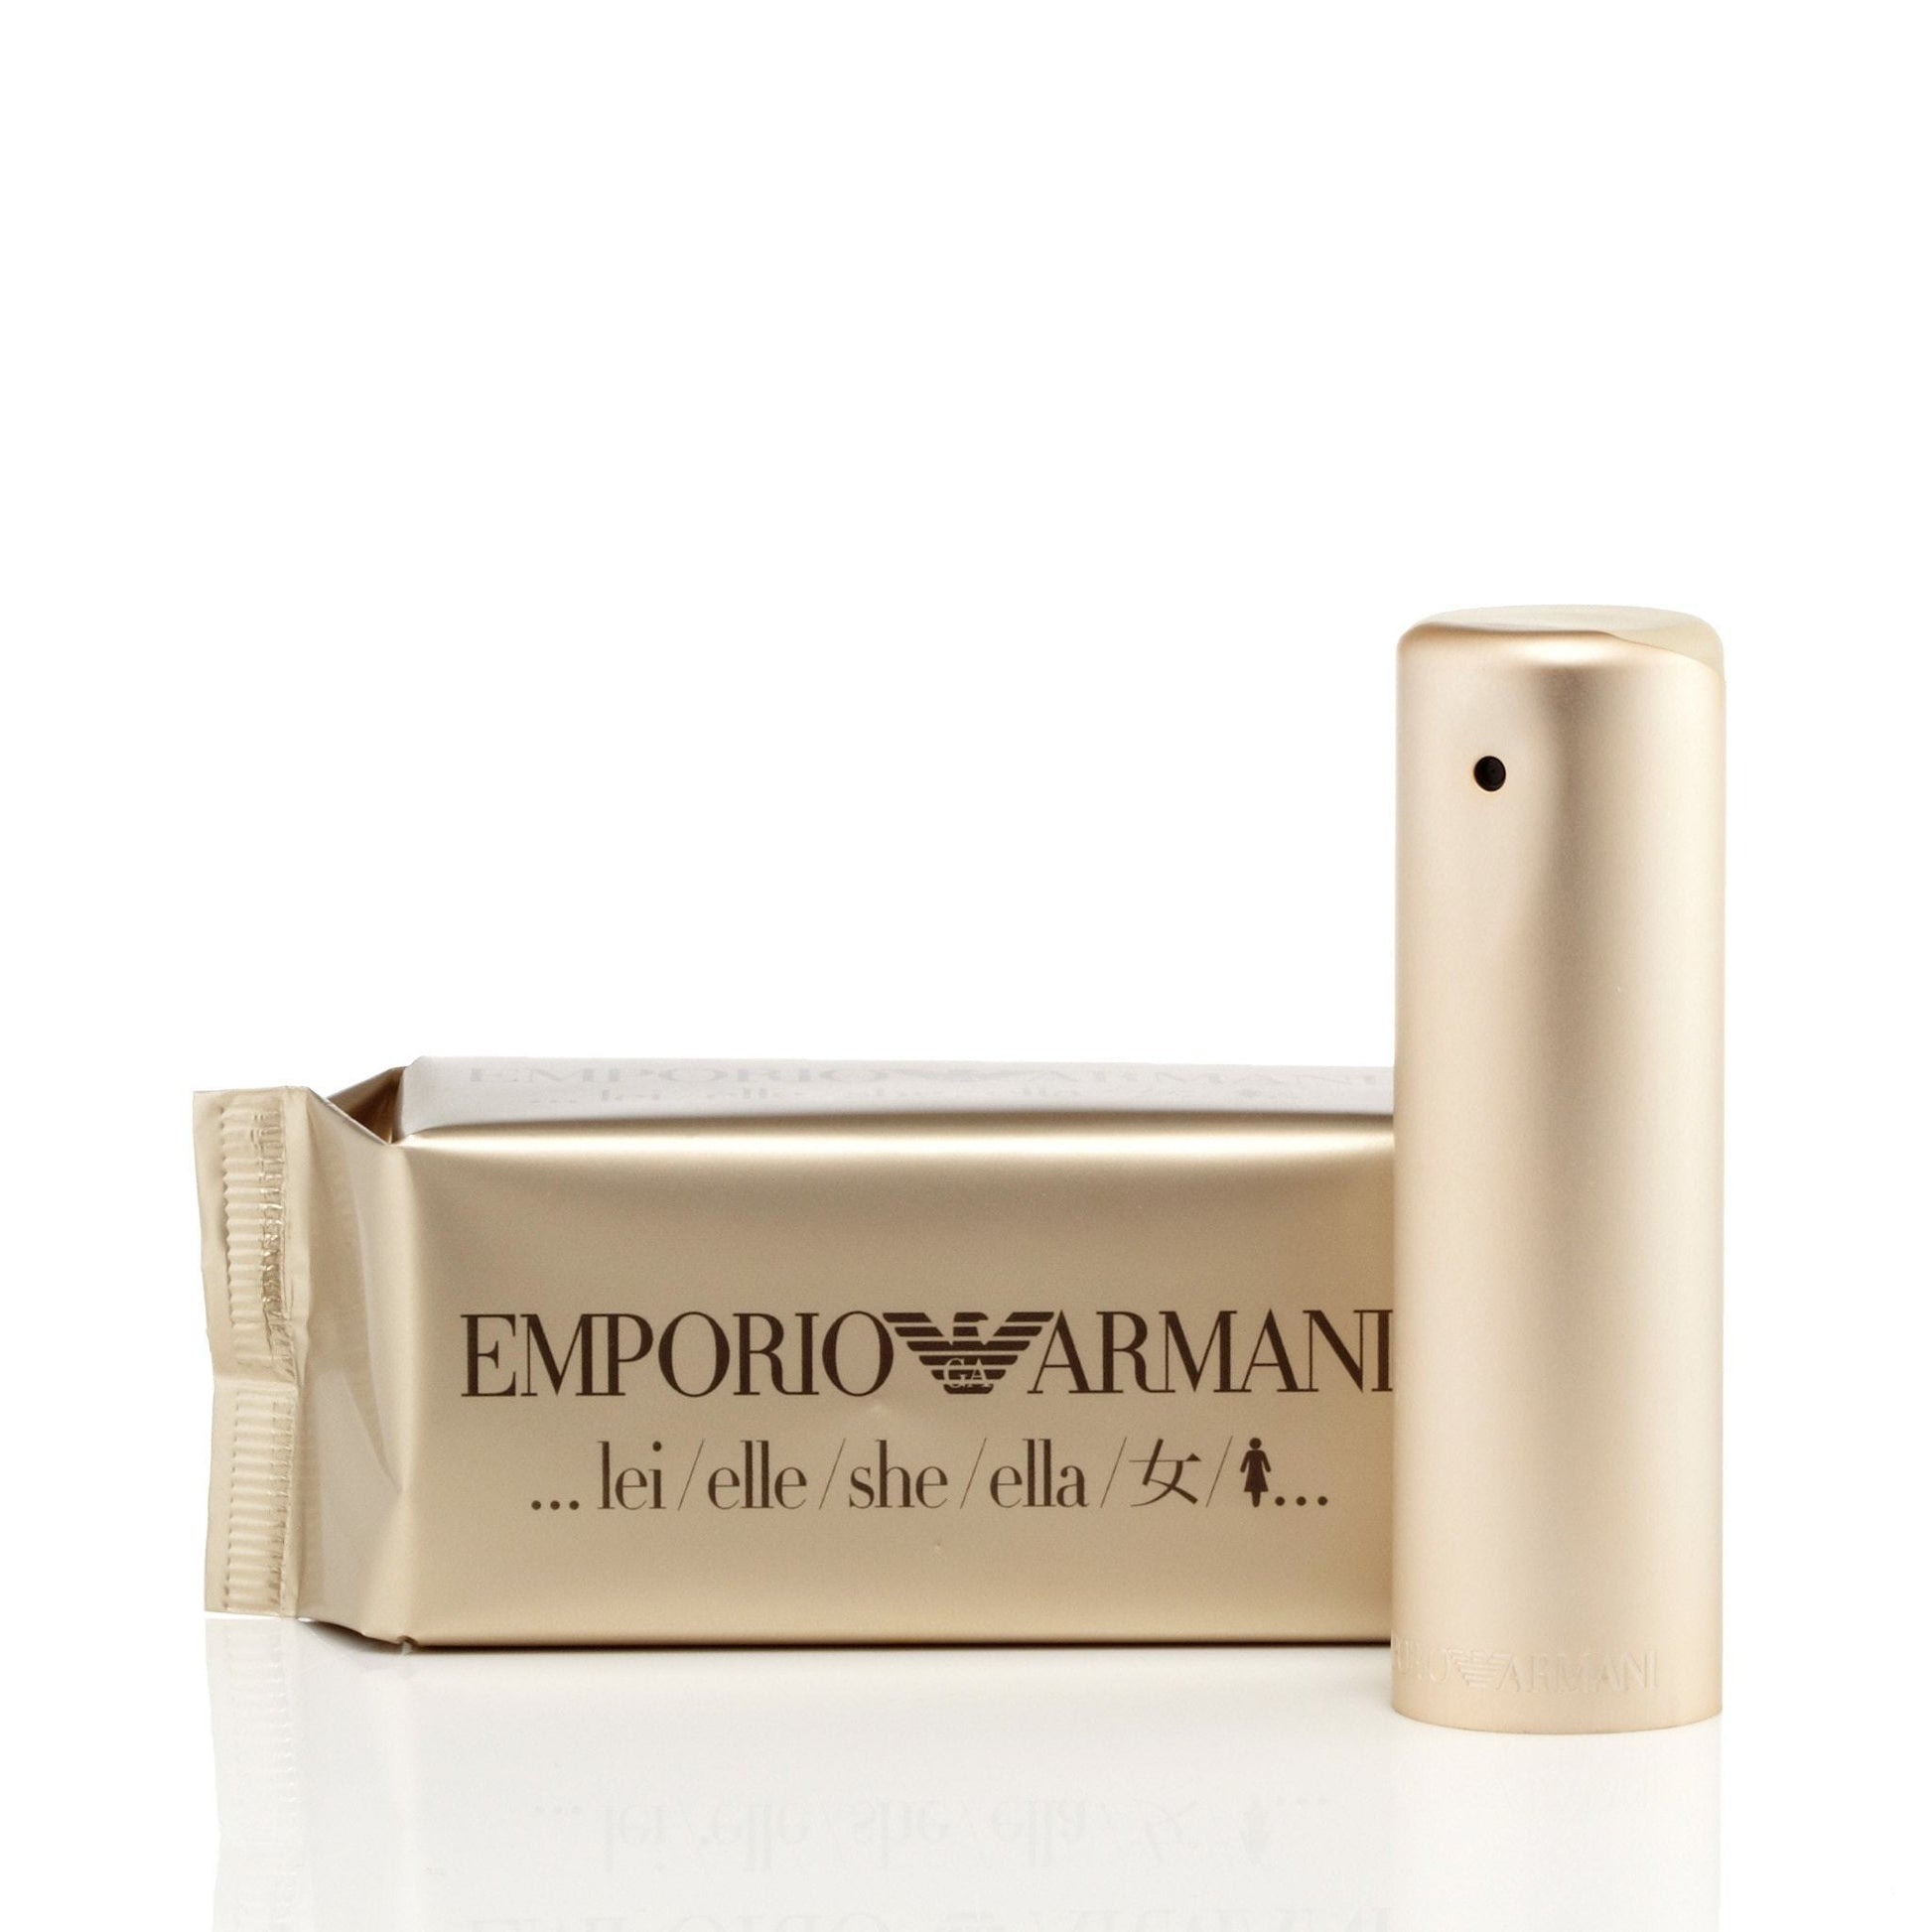 Emporio Armani Eau de Parfum Spray for Women by Giorgio Armani, Product image 1